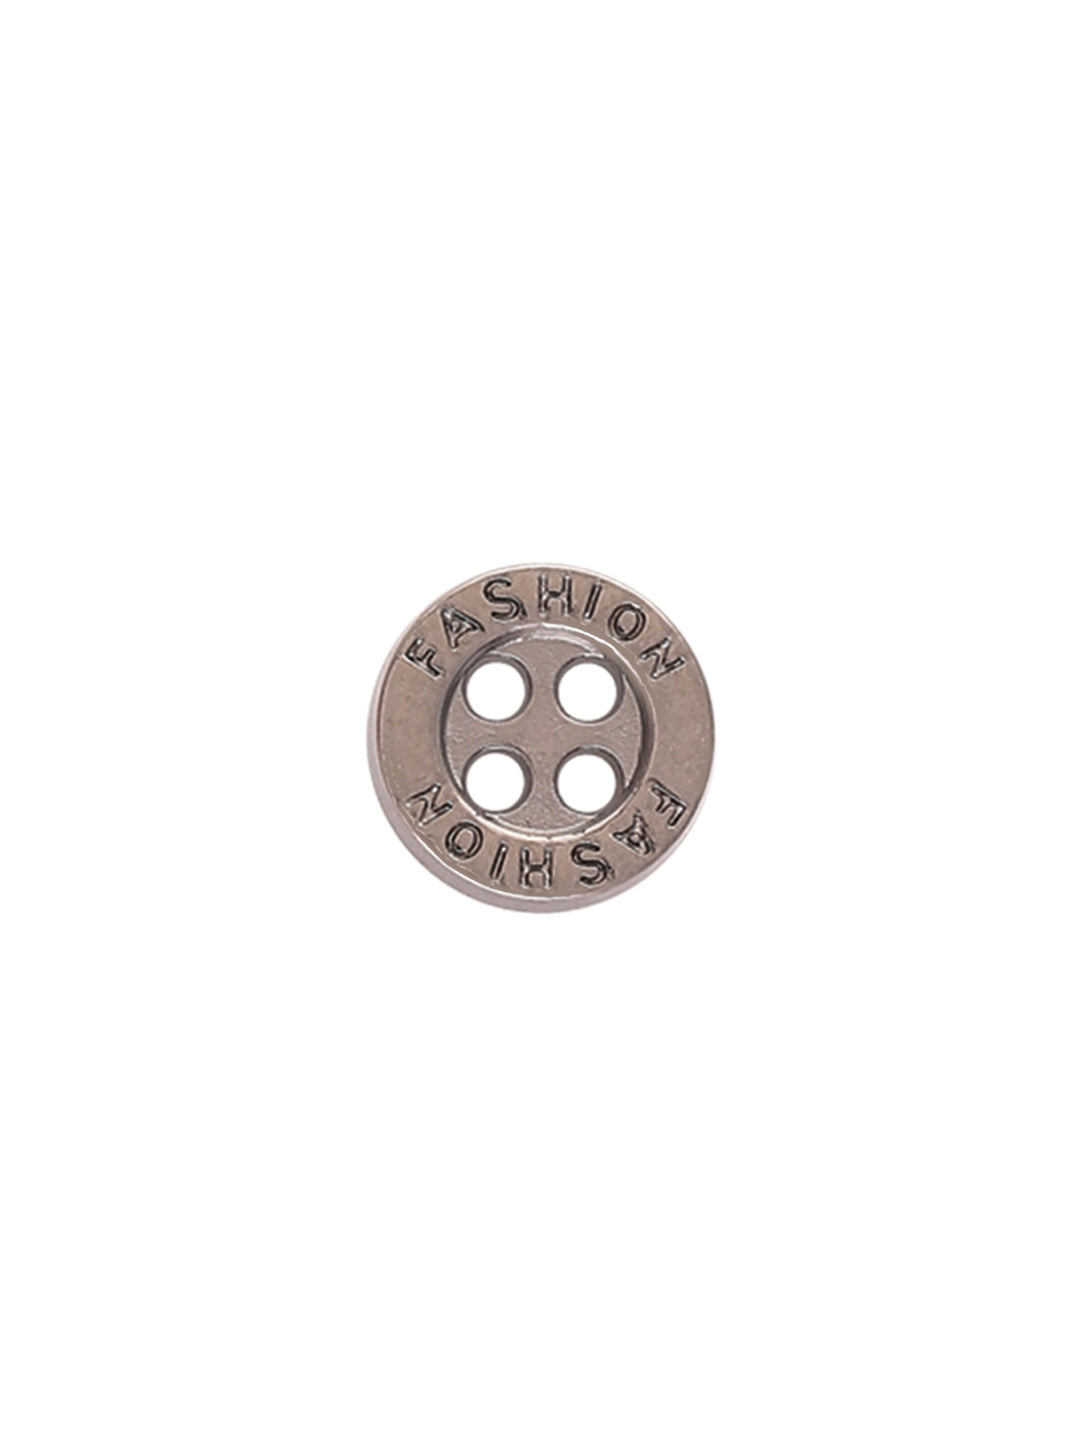 Fashion Round Shape 4-Hole Shirt Metal Button in Black Nickel (Gunmetal) Color